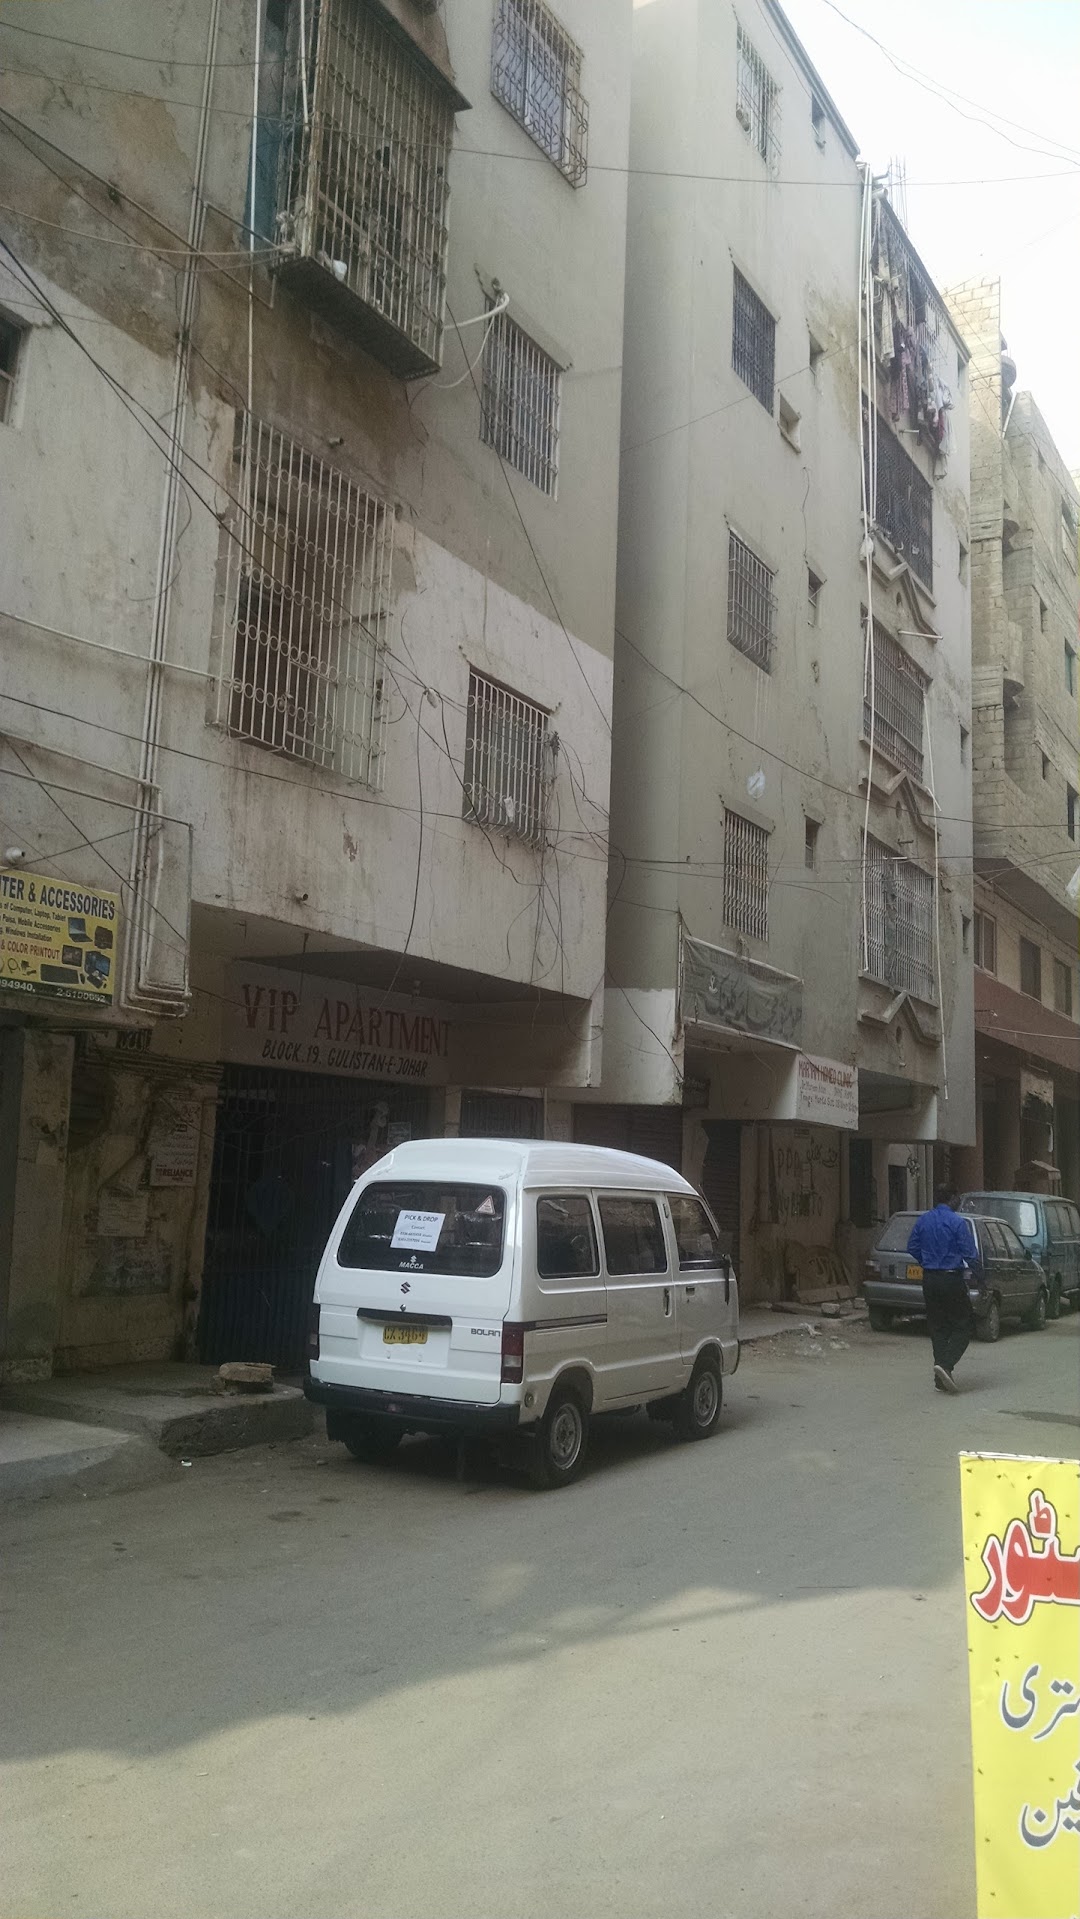 Vip Apartment Block 19 Gulistan Jauhar Karachi